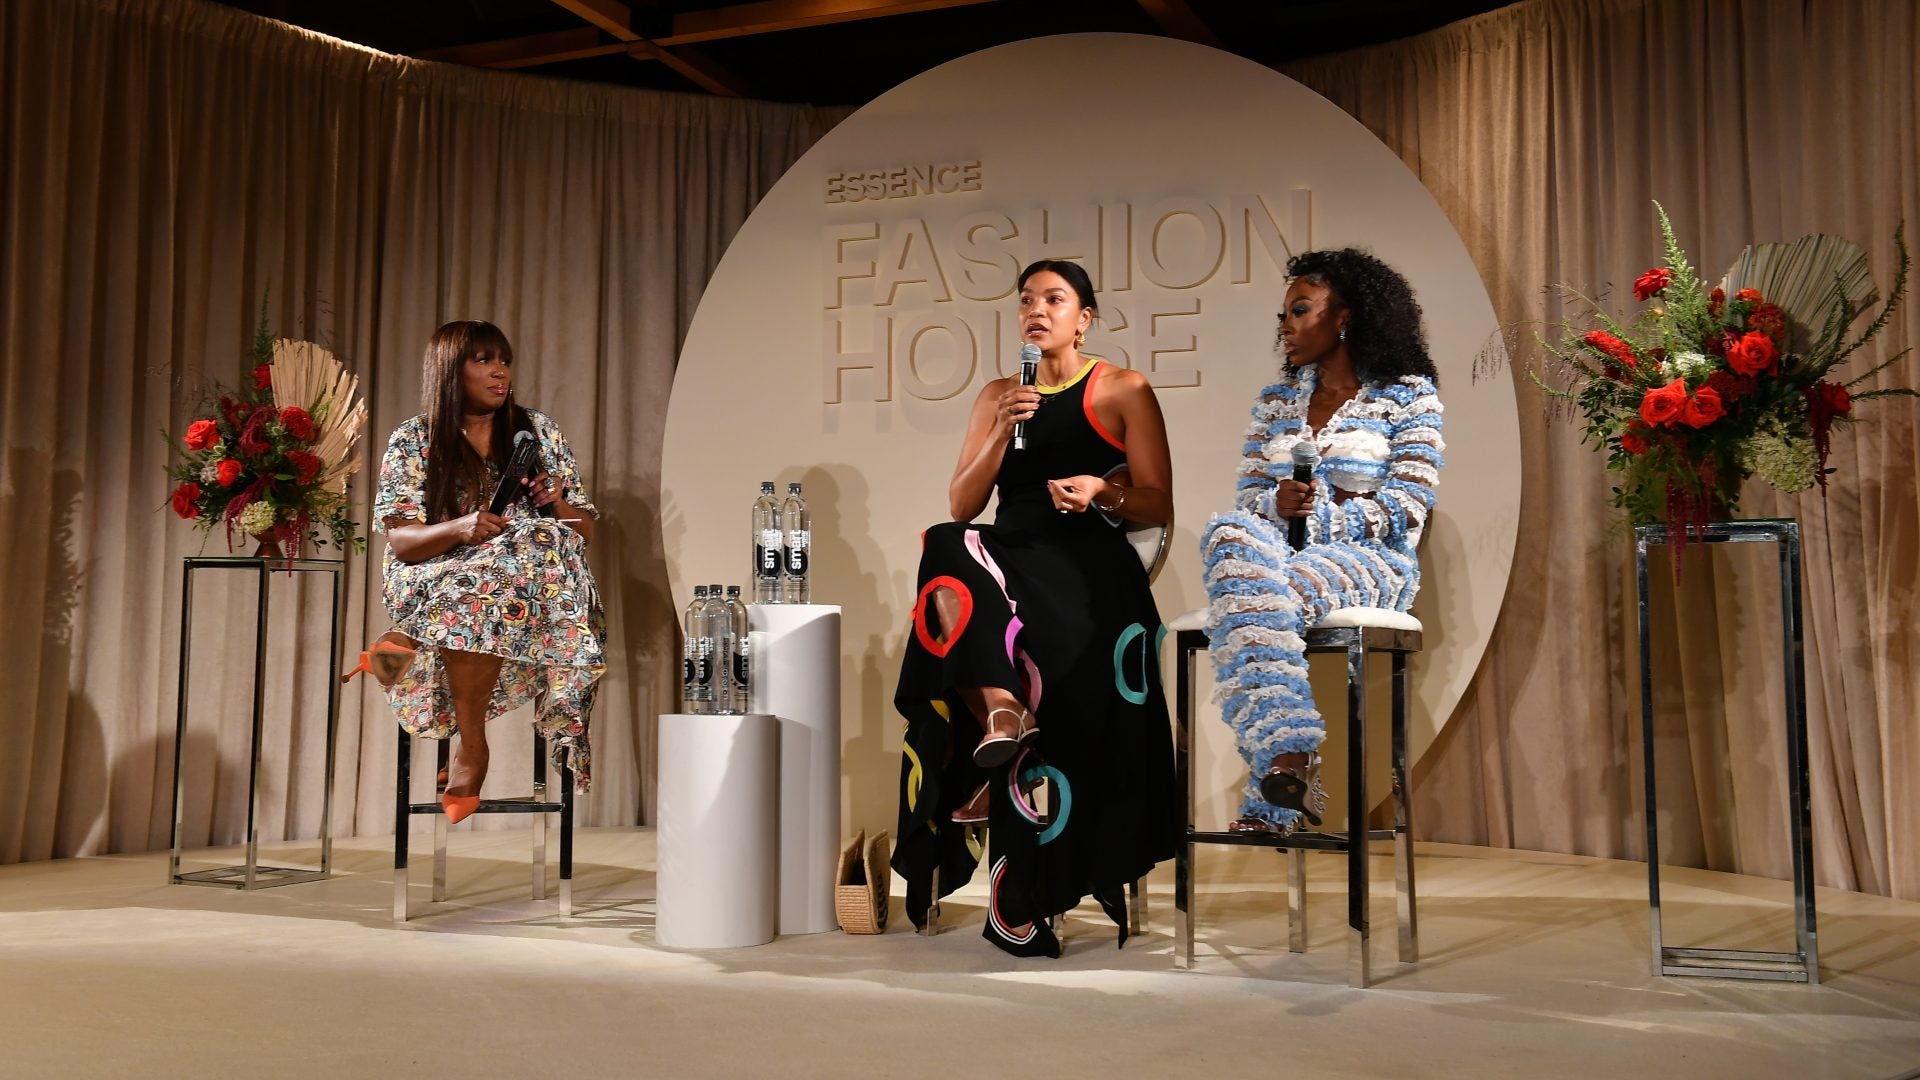 ESSENCE Fashion House: Bringing Black Designers To The Forefront Of Luxury